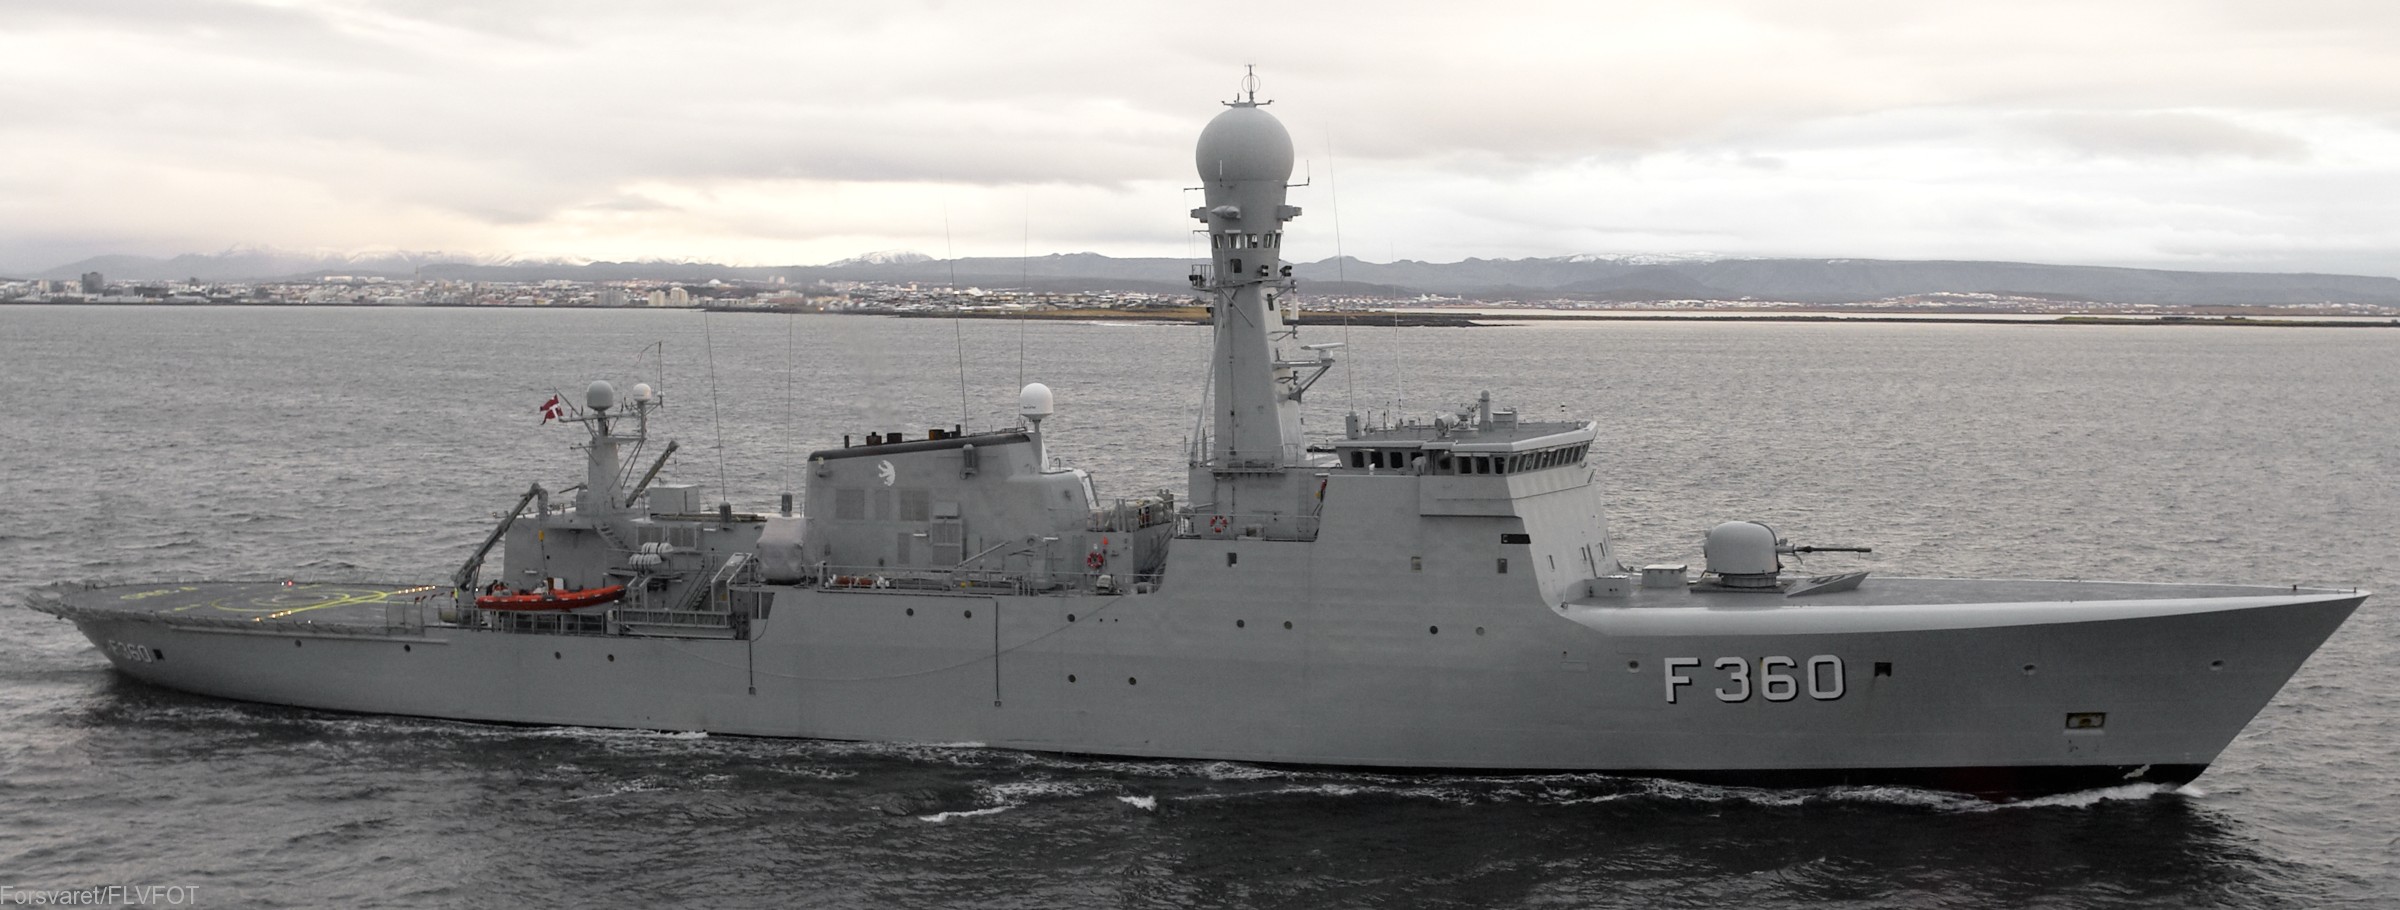 f-360 hdms hvidbjornen thetis class ocean patrol frigate royal danish navy kongelige danske marine kdm inspektionsskibet 17